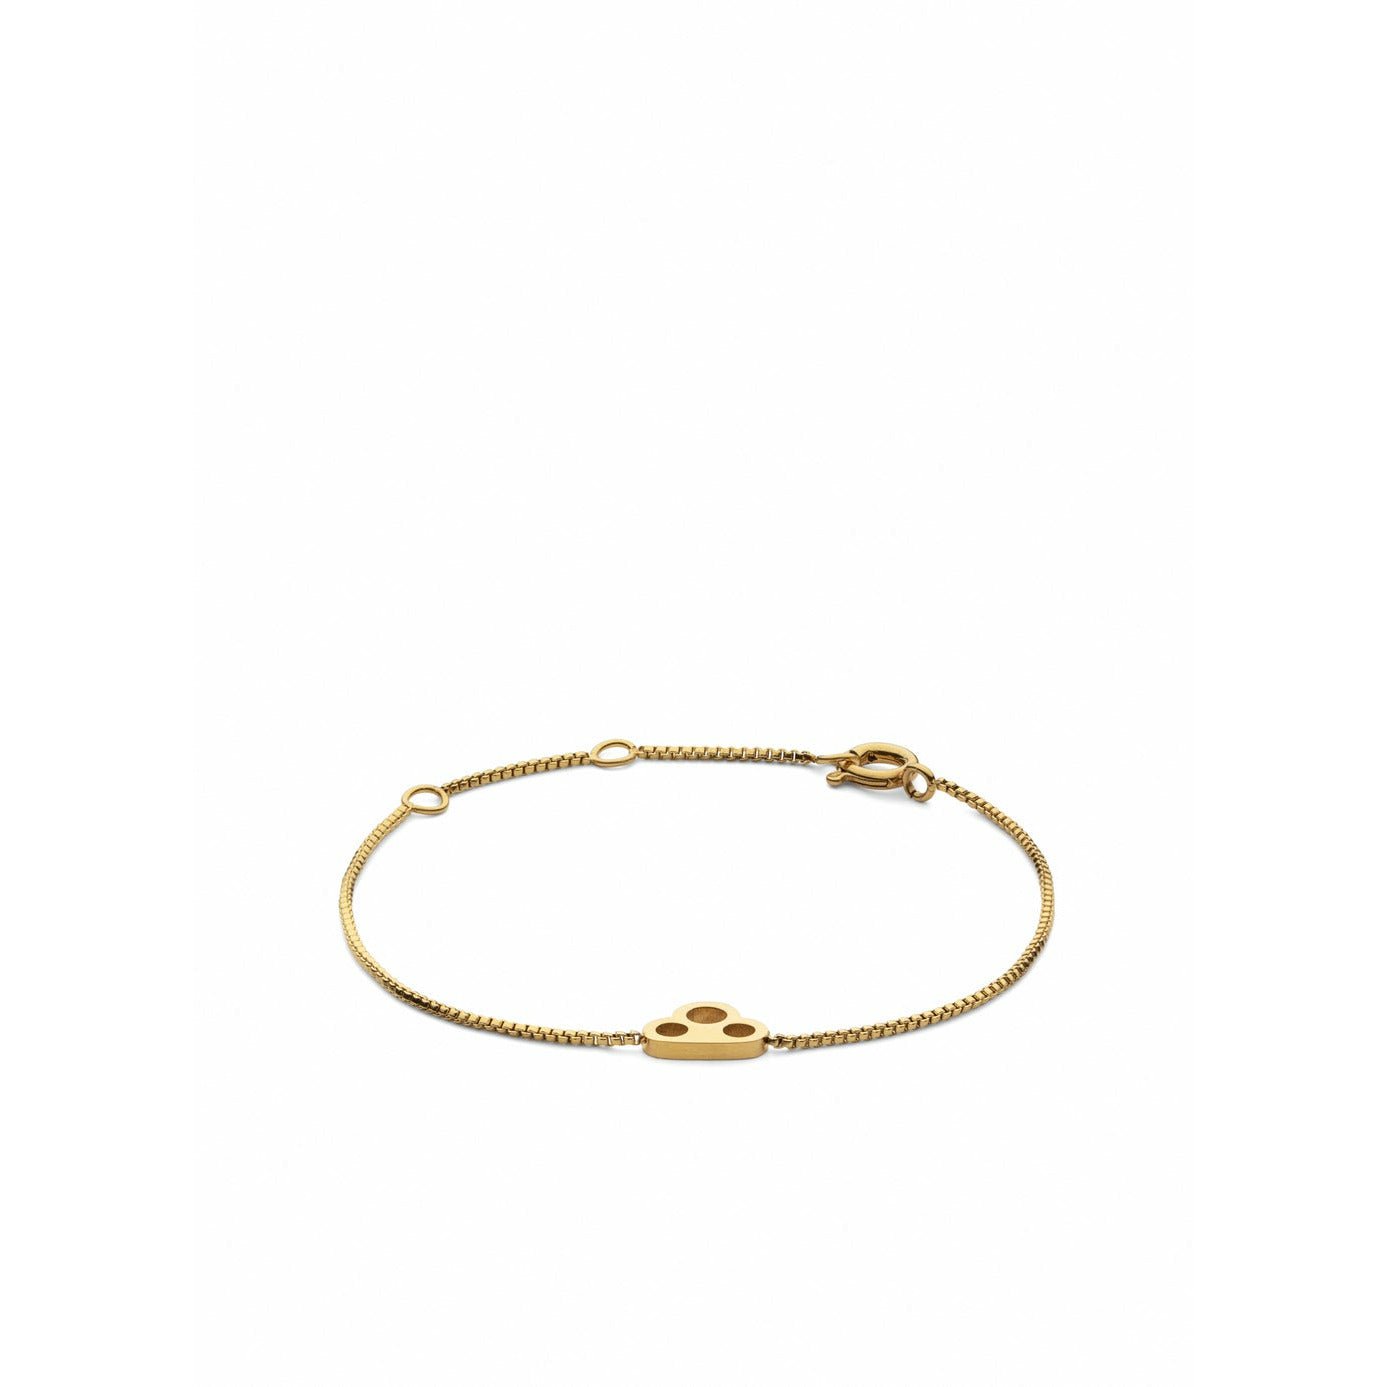 Skultuna Key Chain Bracelet Small Gold Plated, ø14,5 Cm